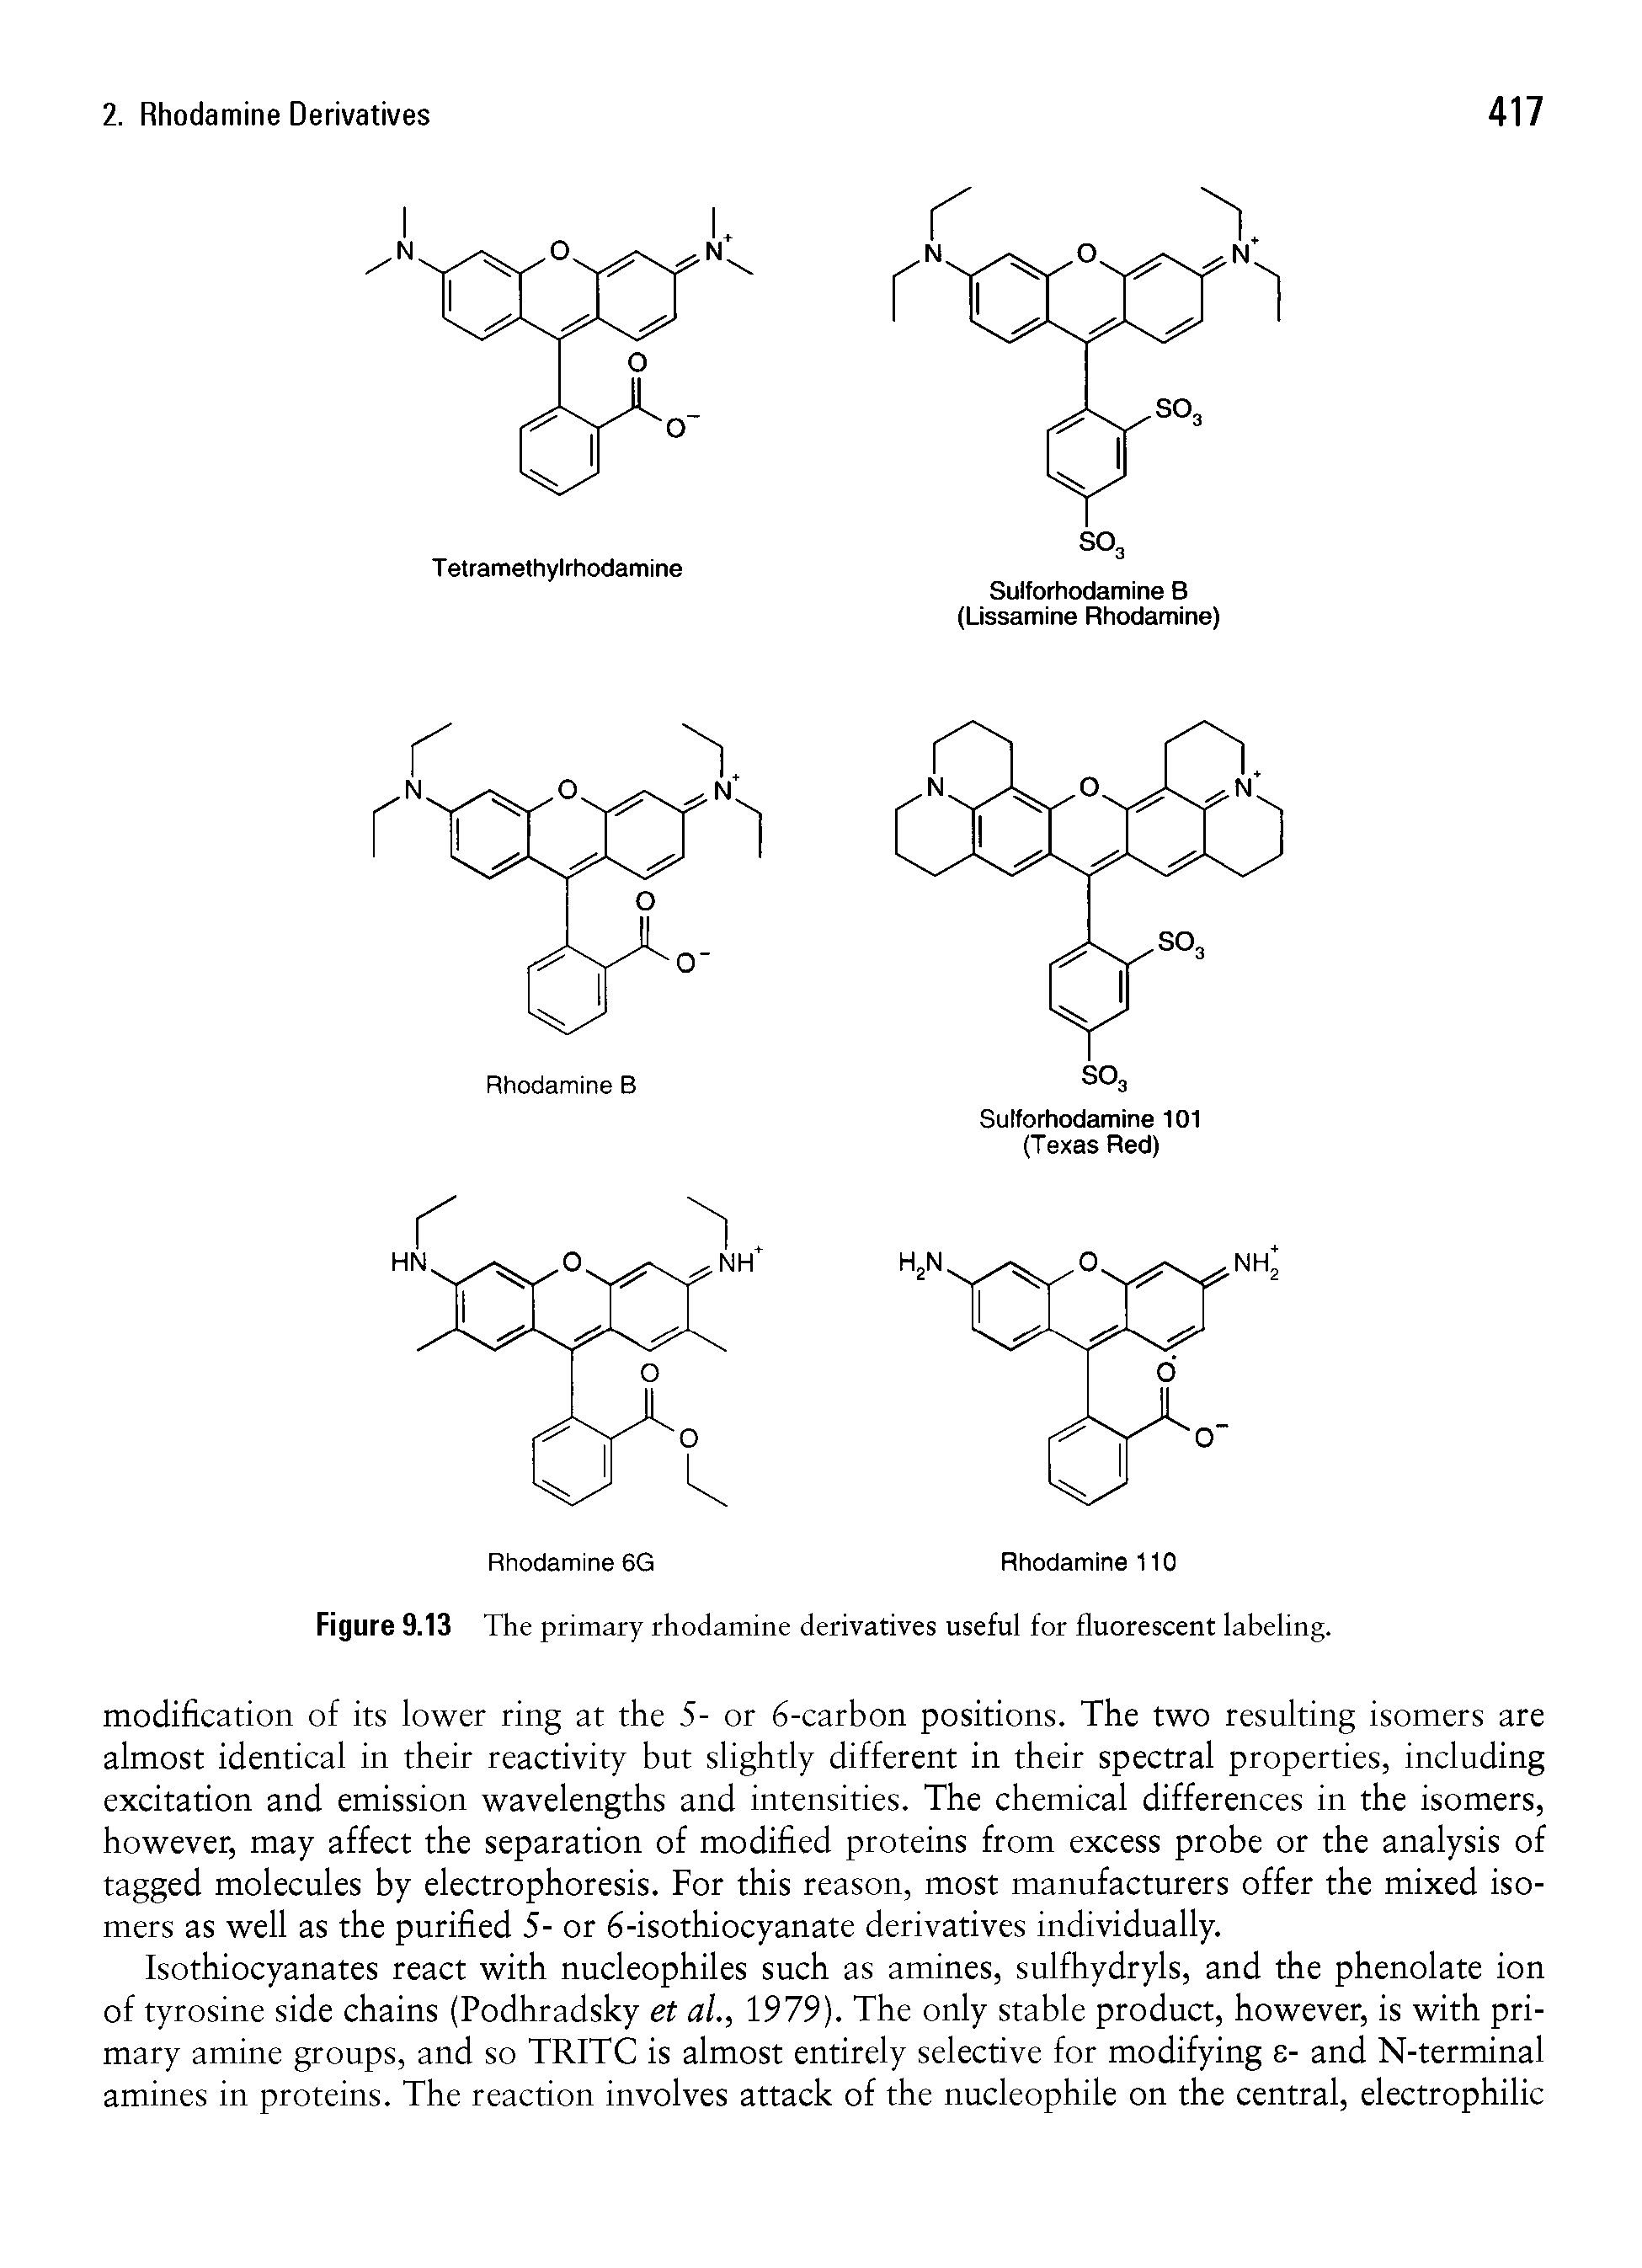 Figure 9.13 The primary rhodamine derivatives useful for fluorescent labeling.